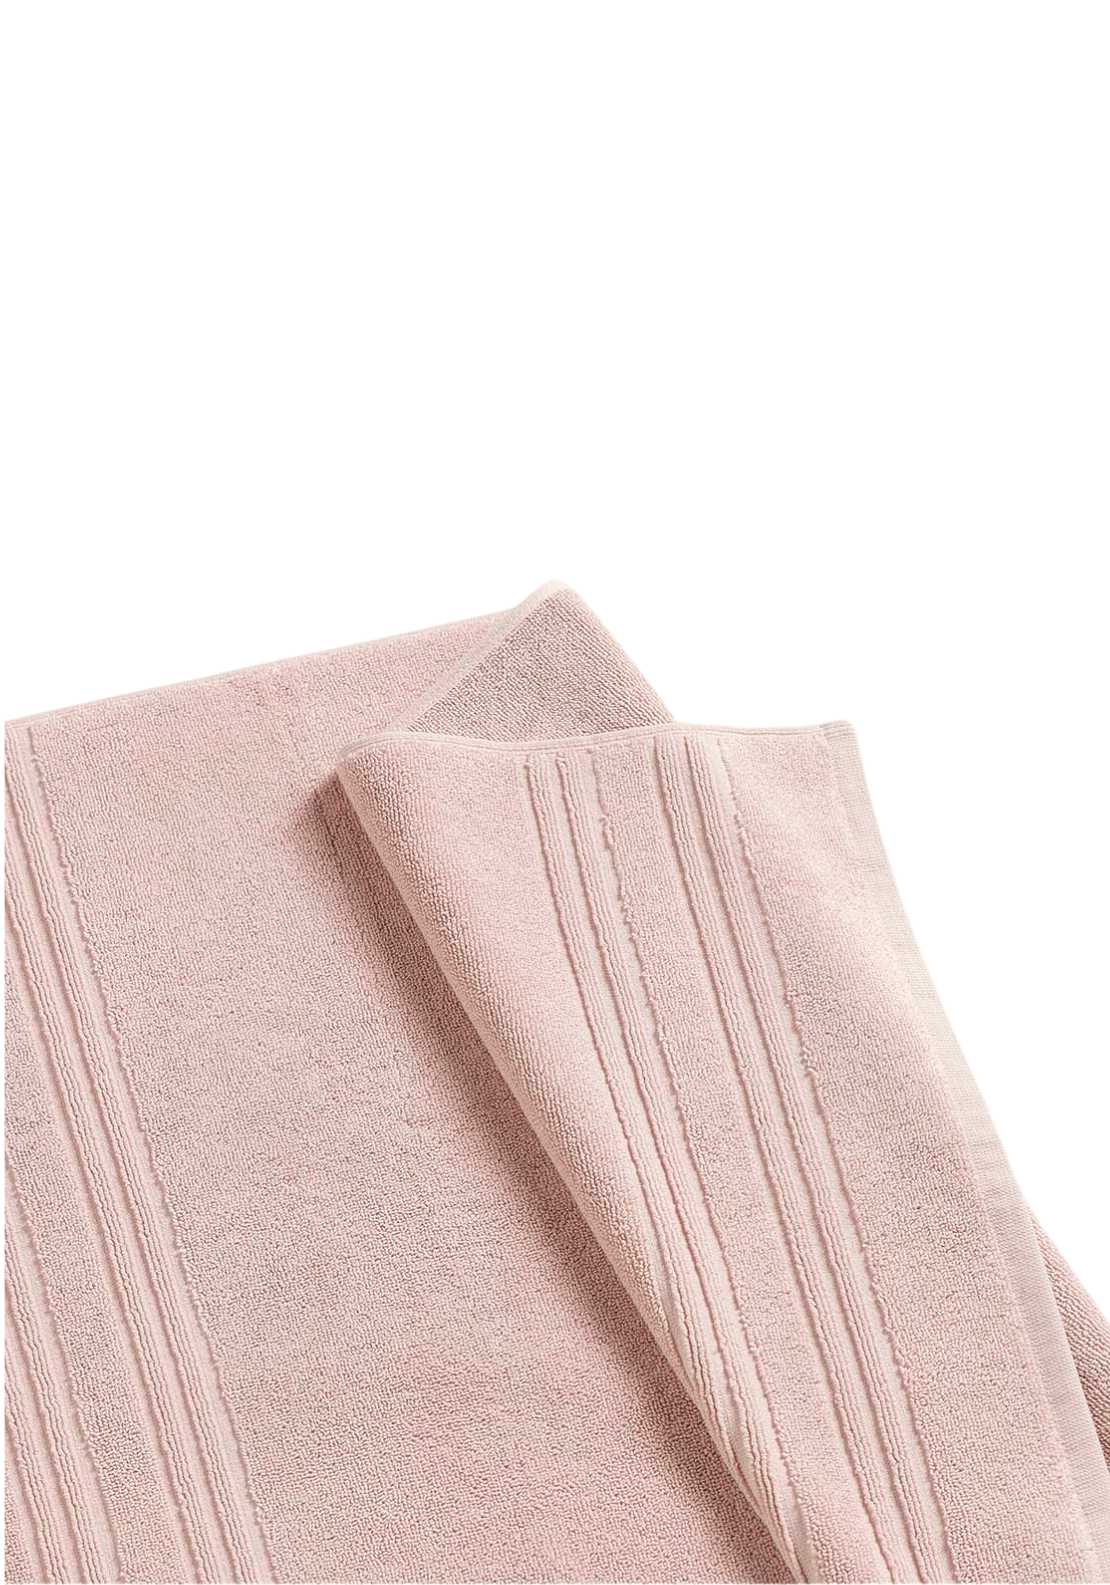 Christy Serene Bath Mat - Dusty Pink 2 Shaws Department Stores